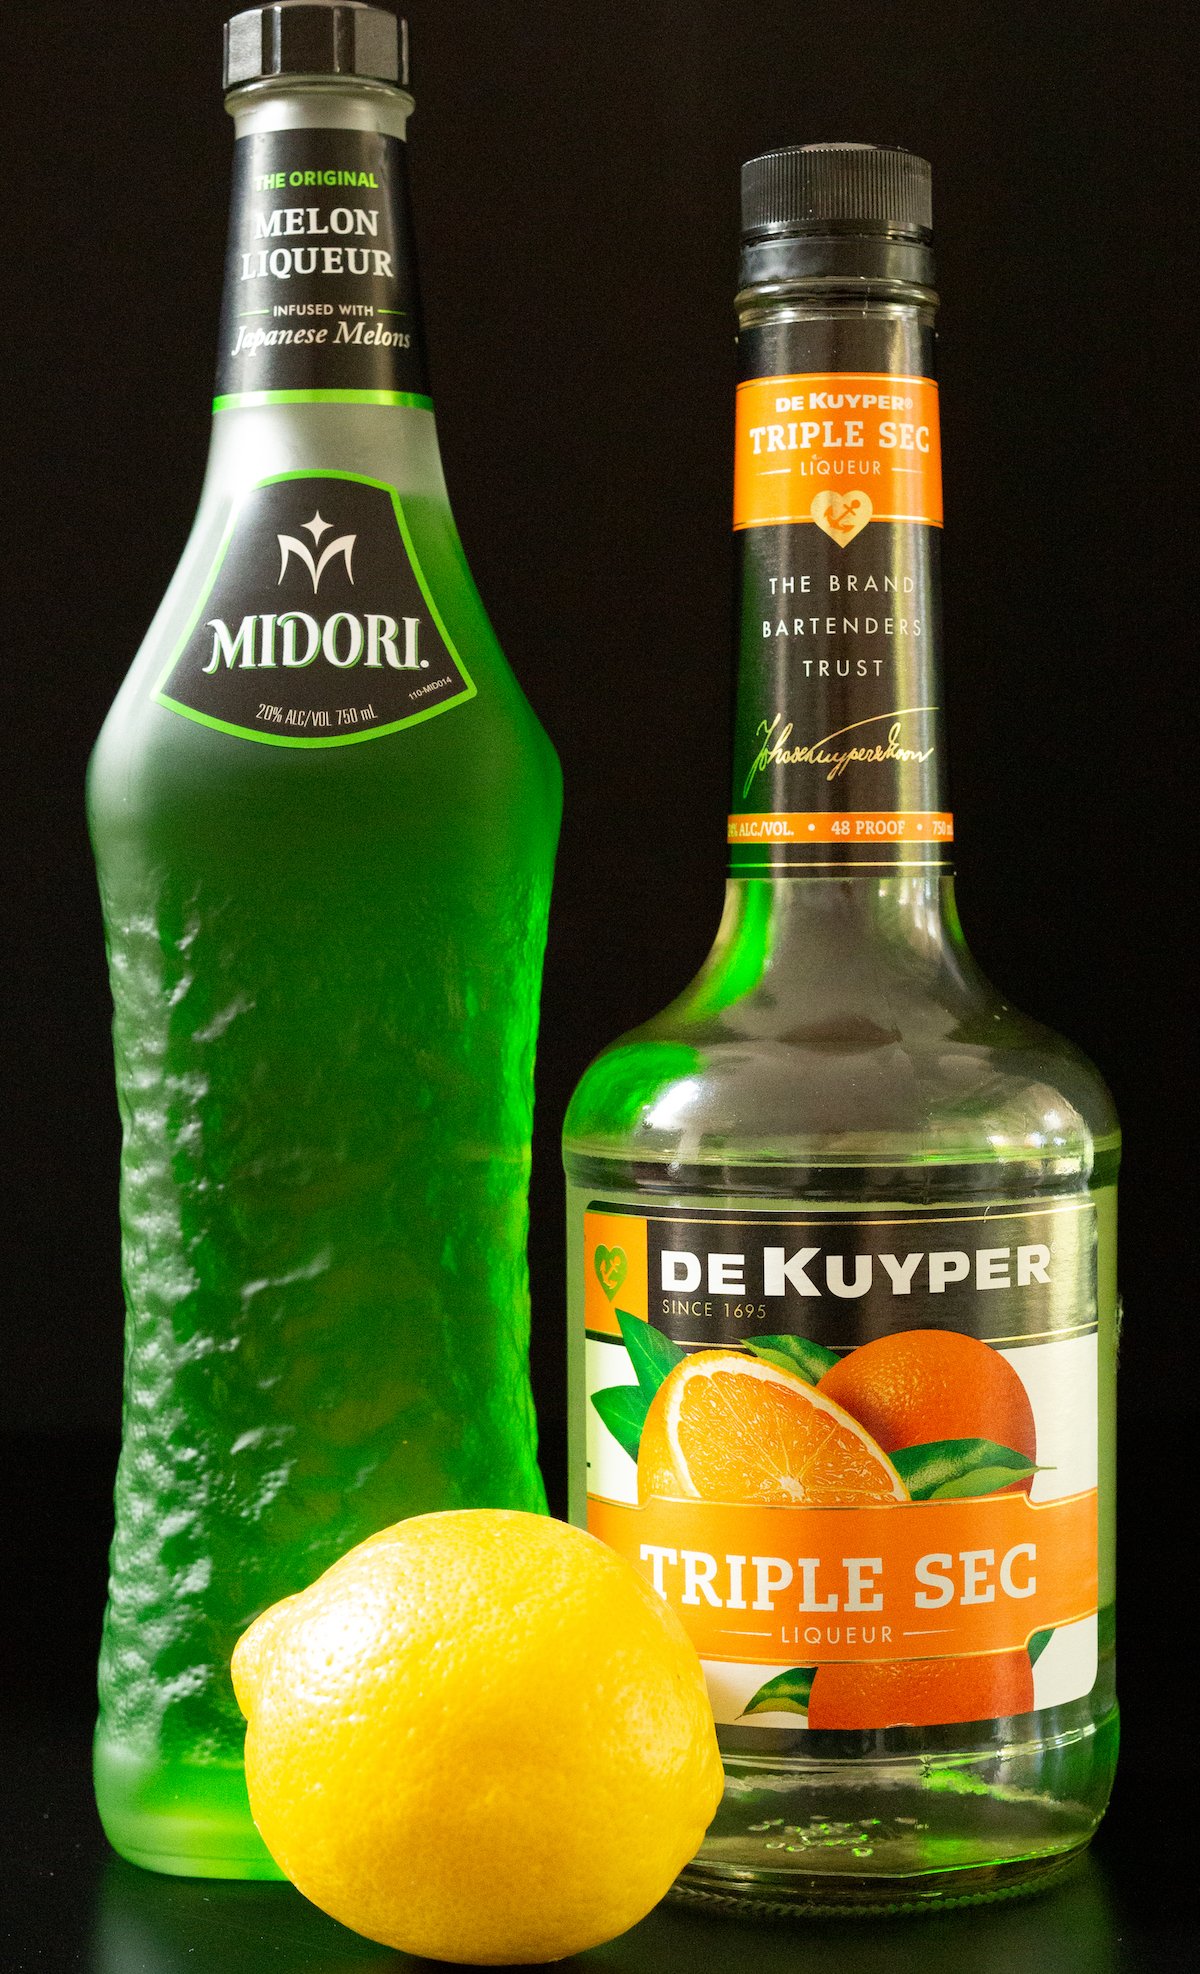 A bottle of Midori, triple sec, and lemon juice on a black background.